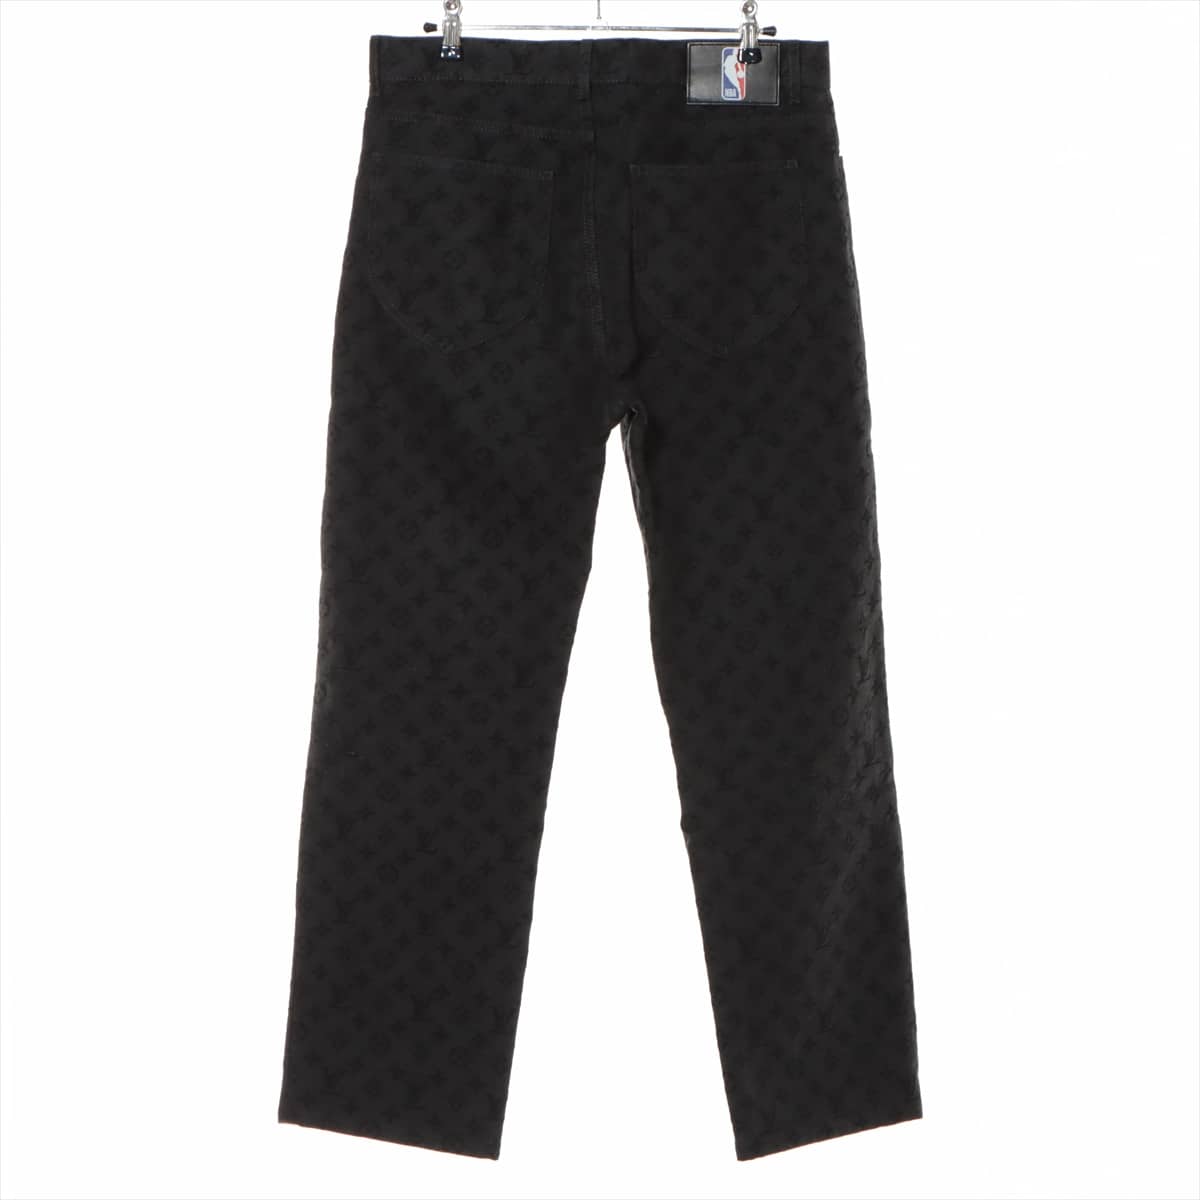 Louis Vuitton x NBA Monogram Cotton Denim pants 28 Men's Black  1A8H0R